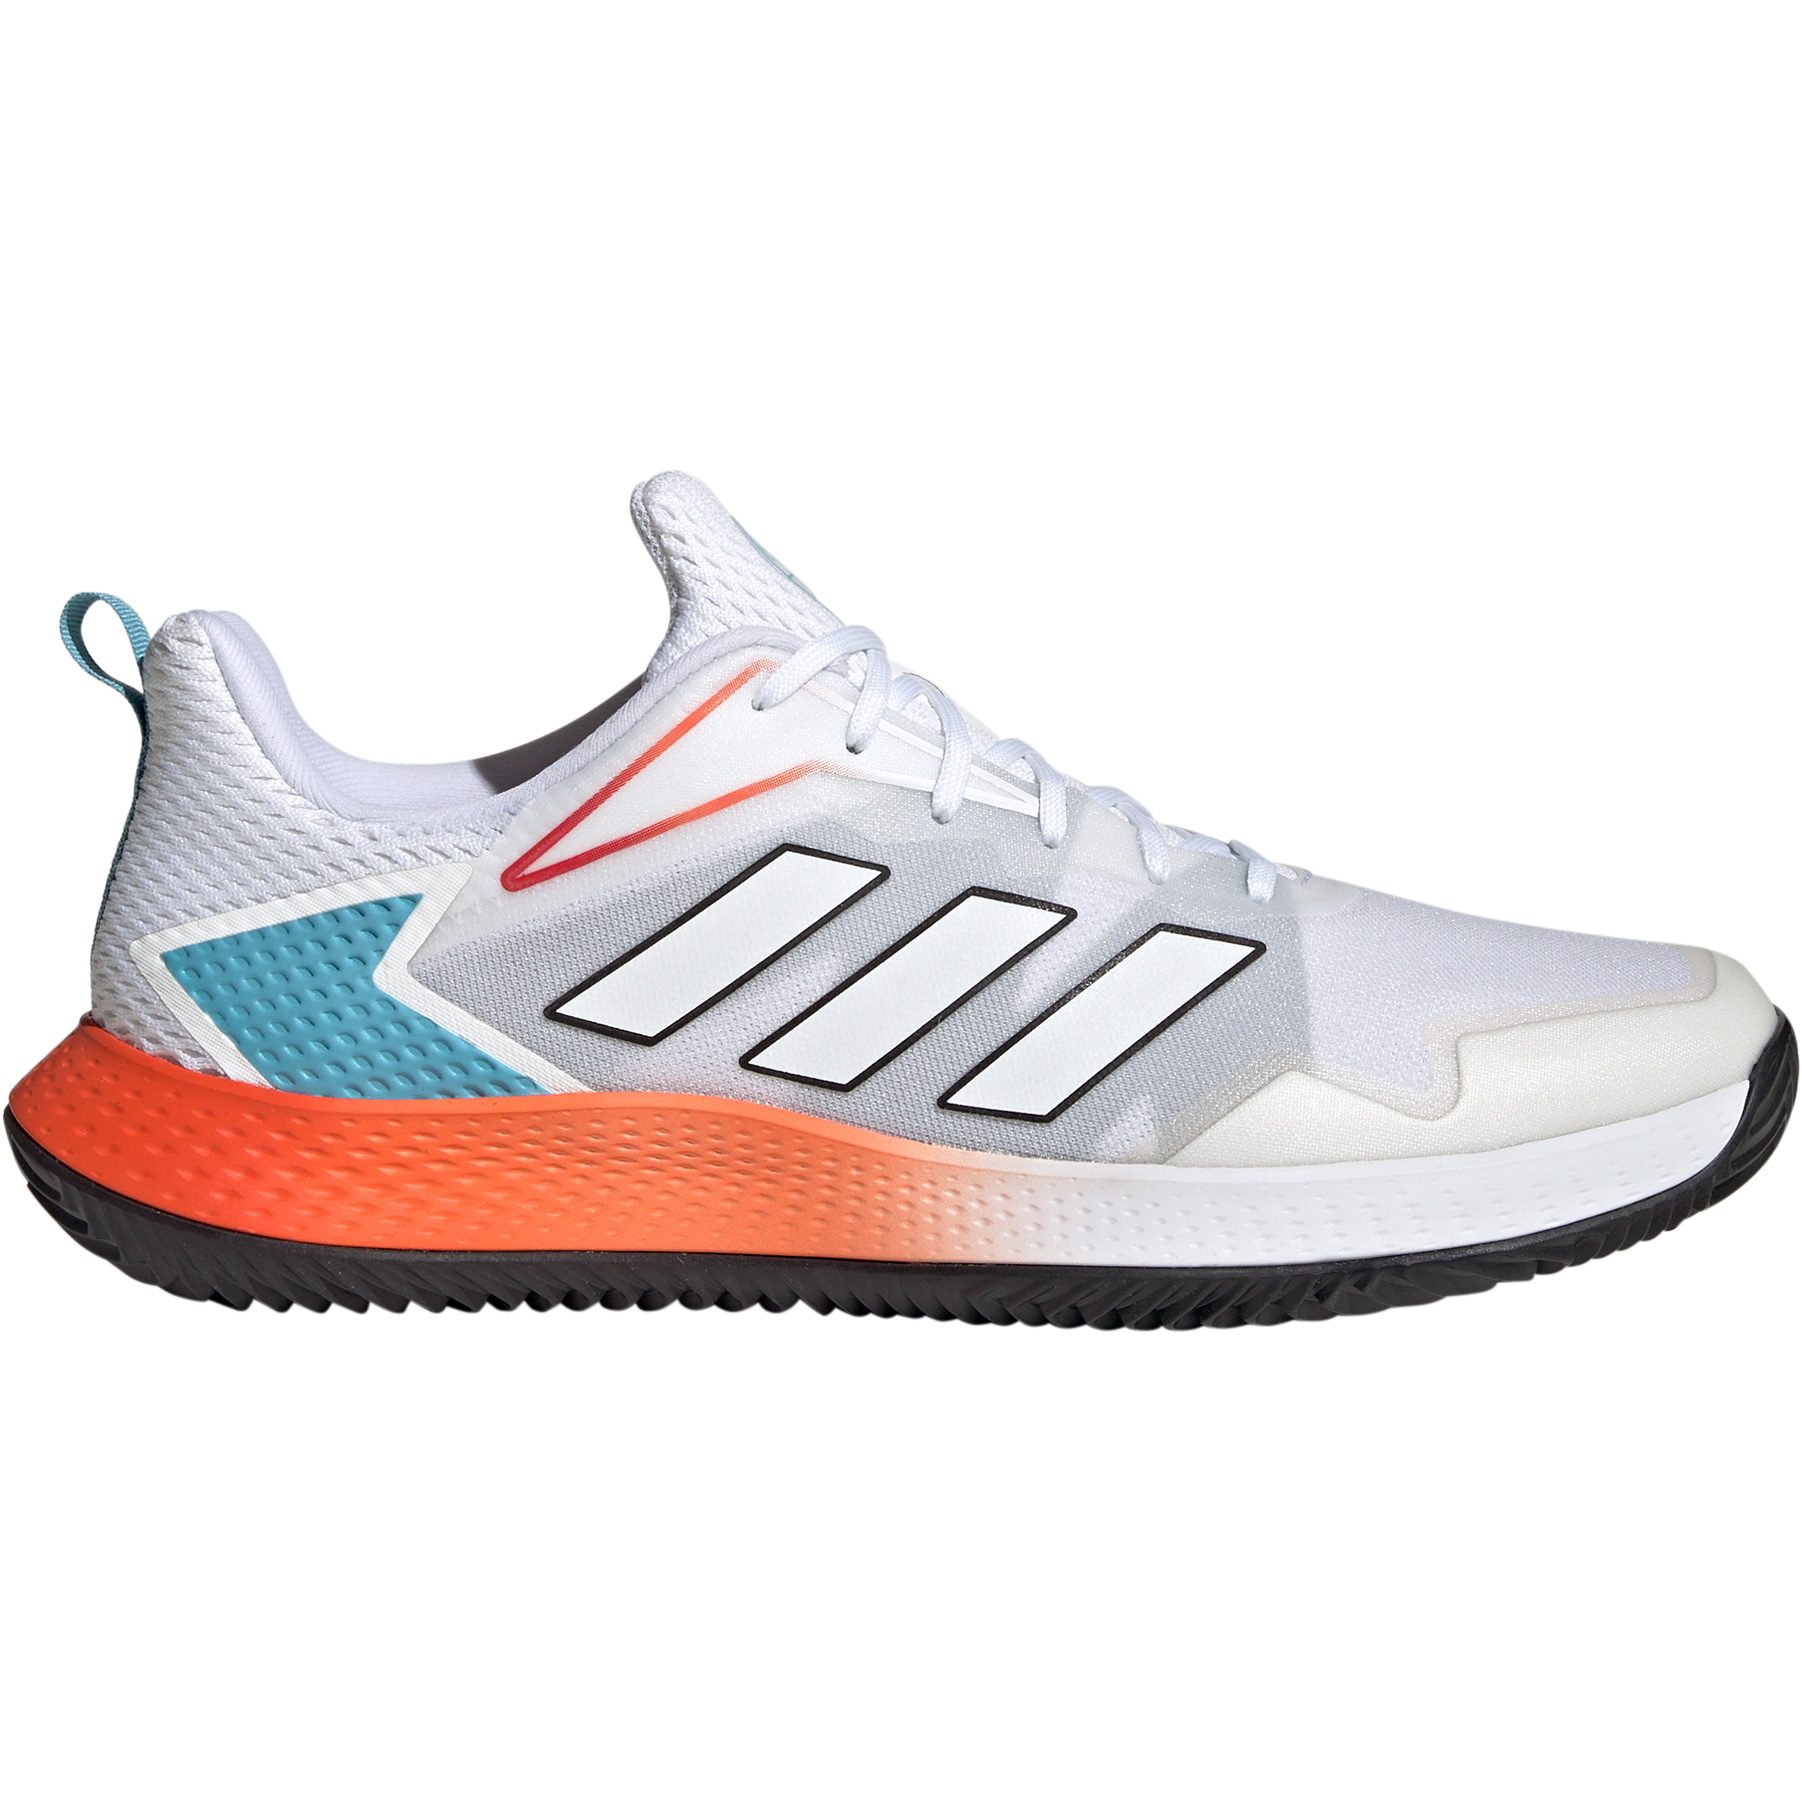 adidas - Defiant Speed Tennis Shoes Men footwear white Sport Bittl Shop